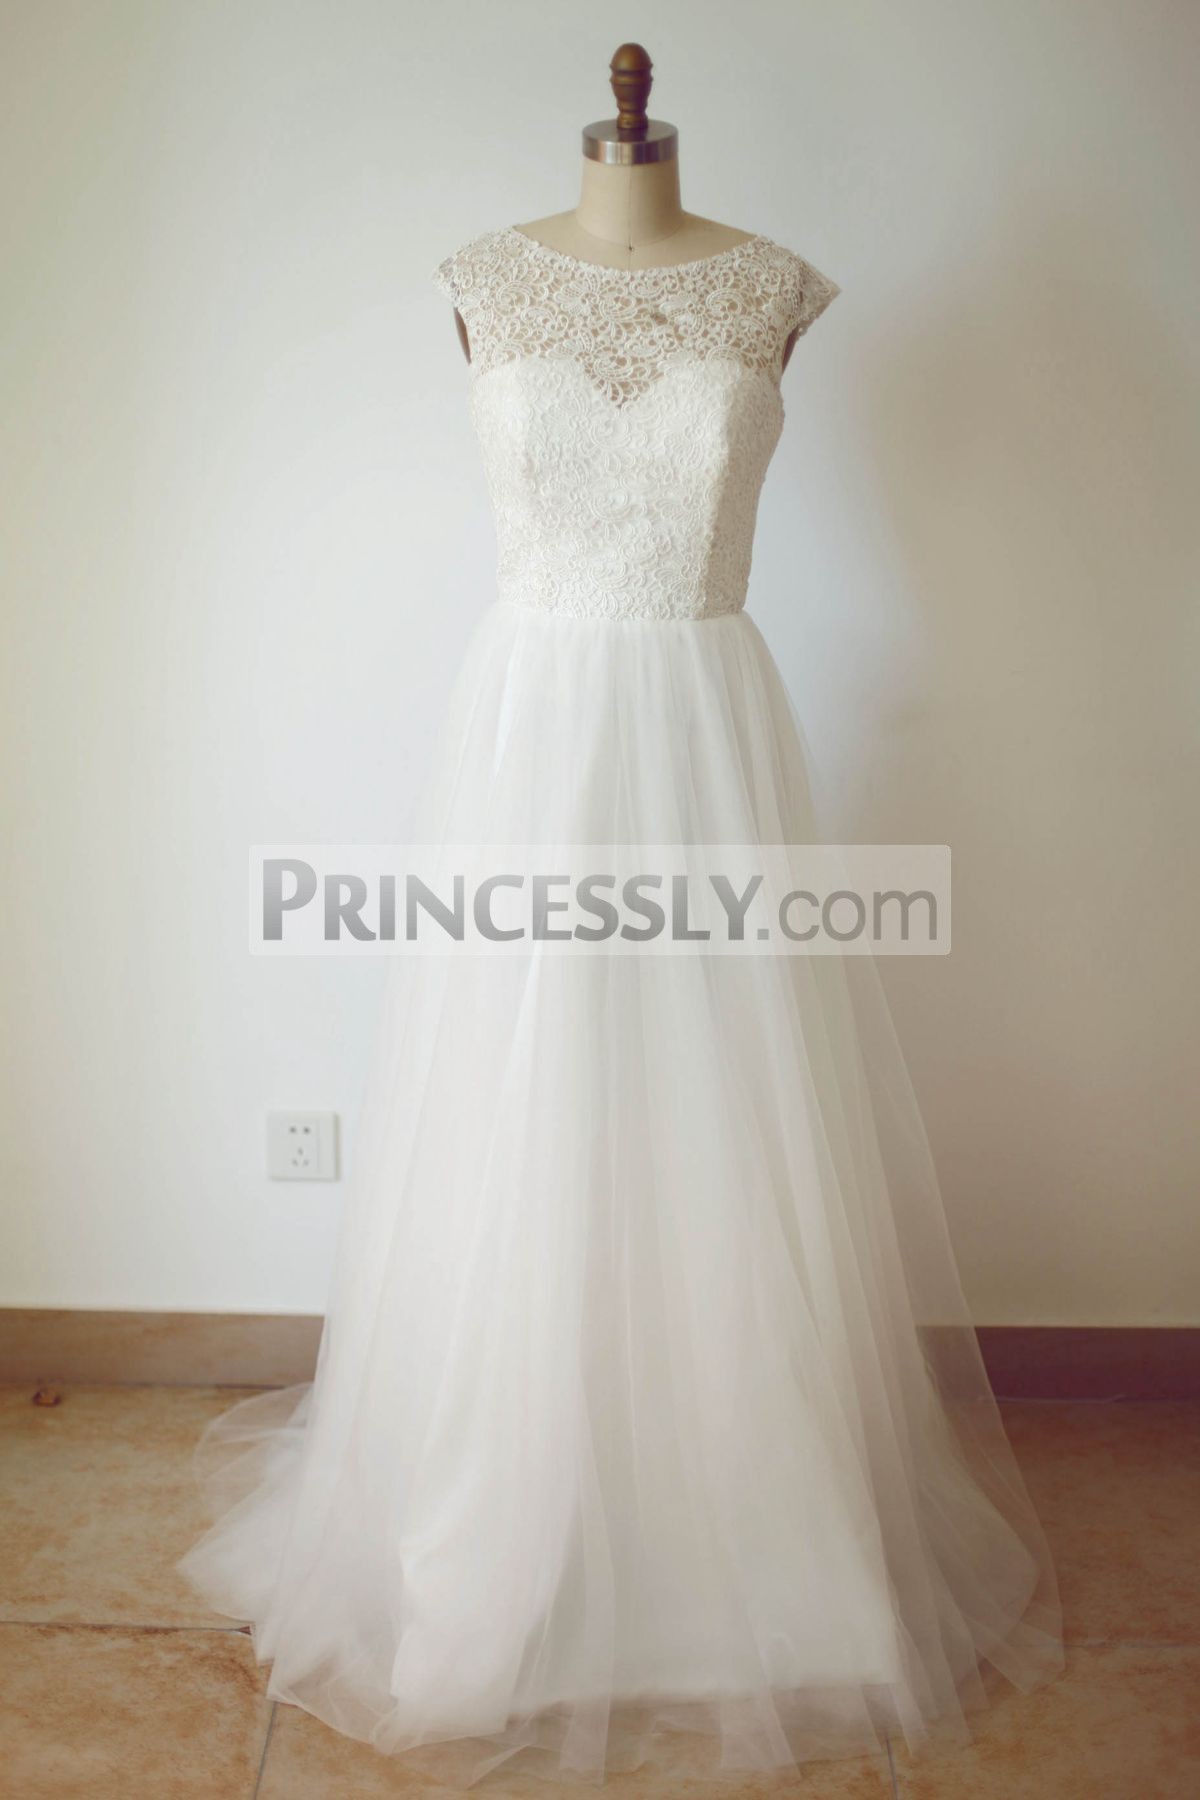 Princessly.com-K1000253-Sheer Illusion Lace Tulle Wedding Dress-31